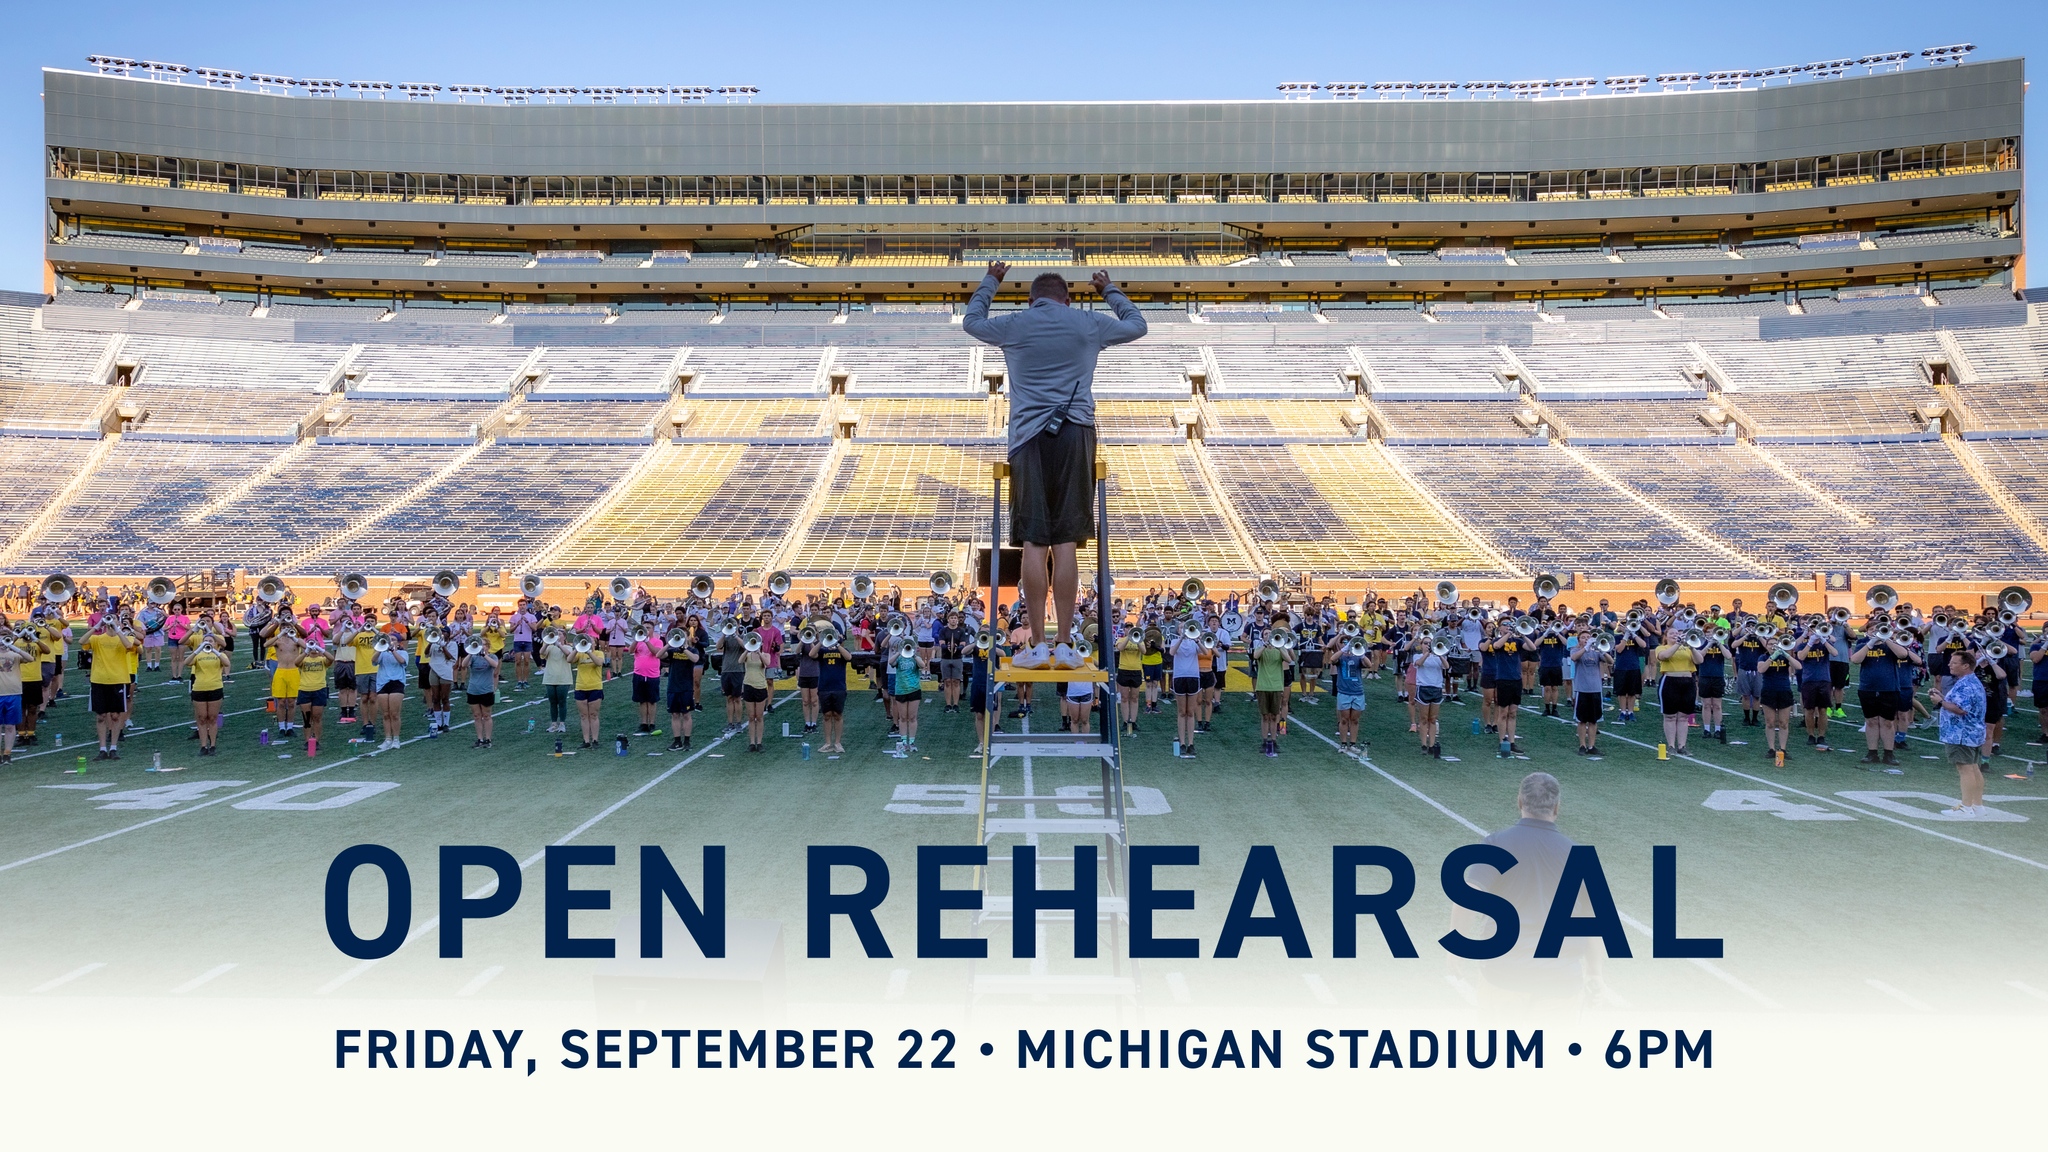 Open Rehearsal, Friday September 22 - Michigan Stadium - 6pm. Photo of MMB rehearsal in an empty Michigan Stadium.